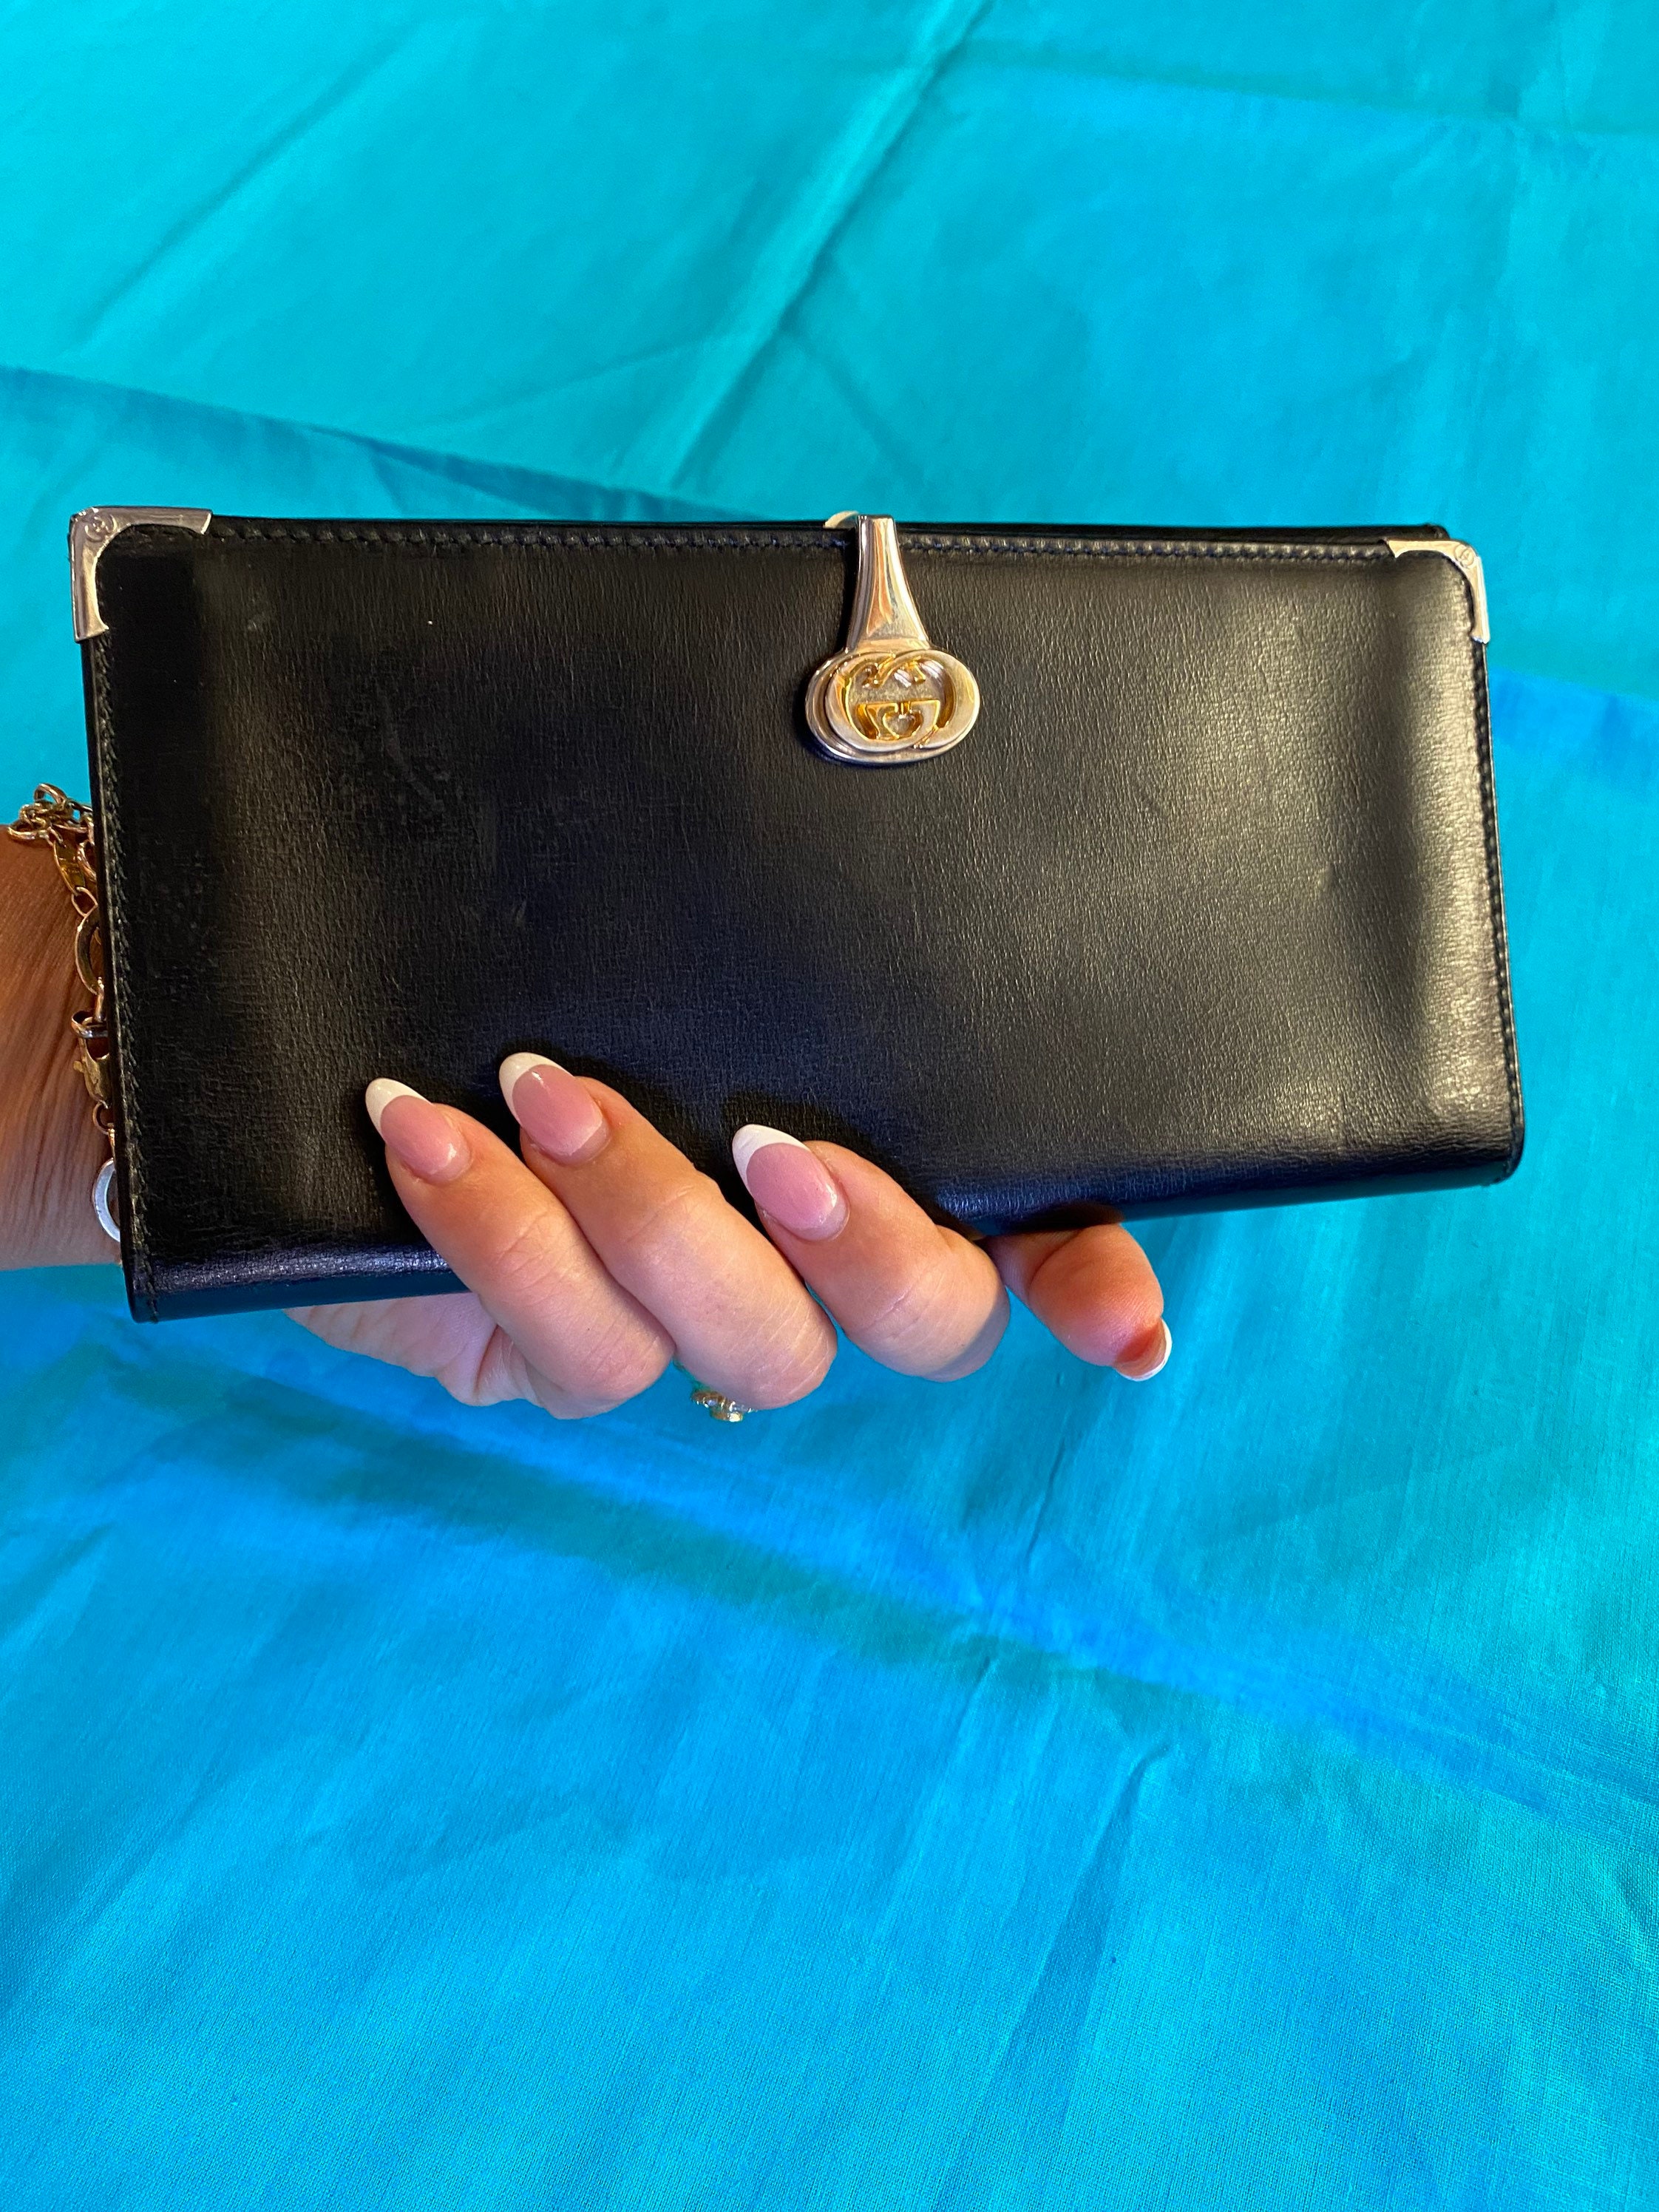 Gucci Vintage G Clasp Wallet - Neutrals Wallets, Accessories - GUC950627